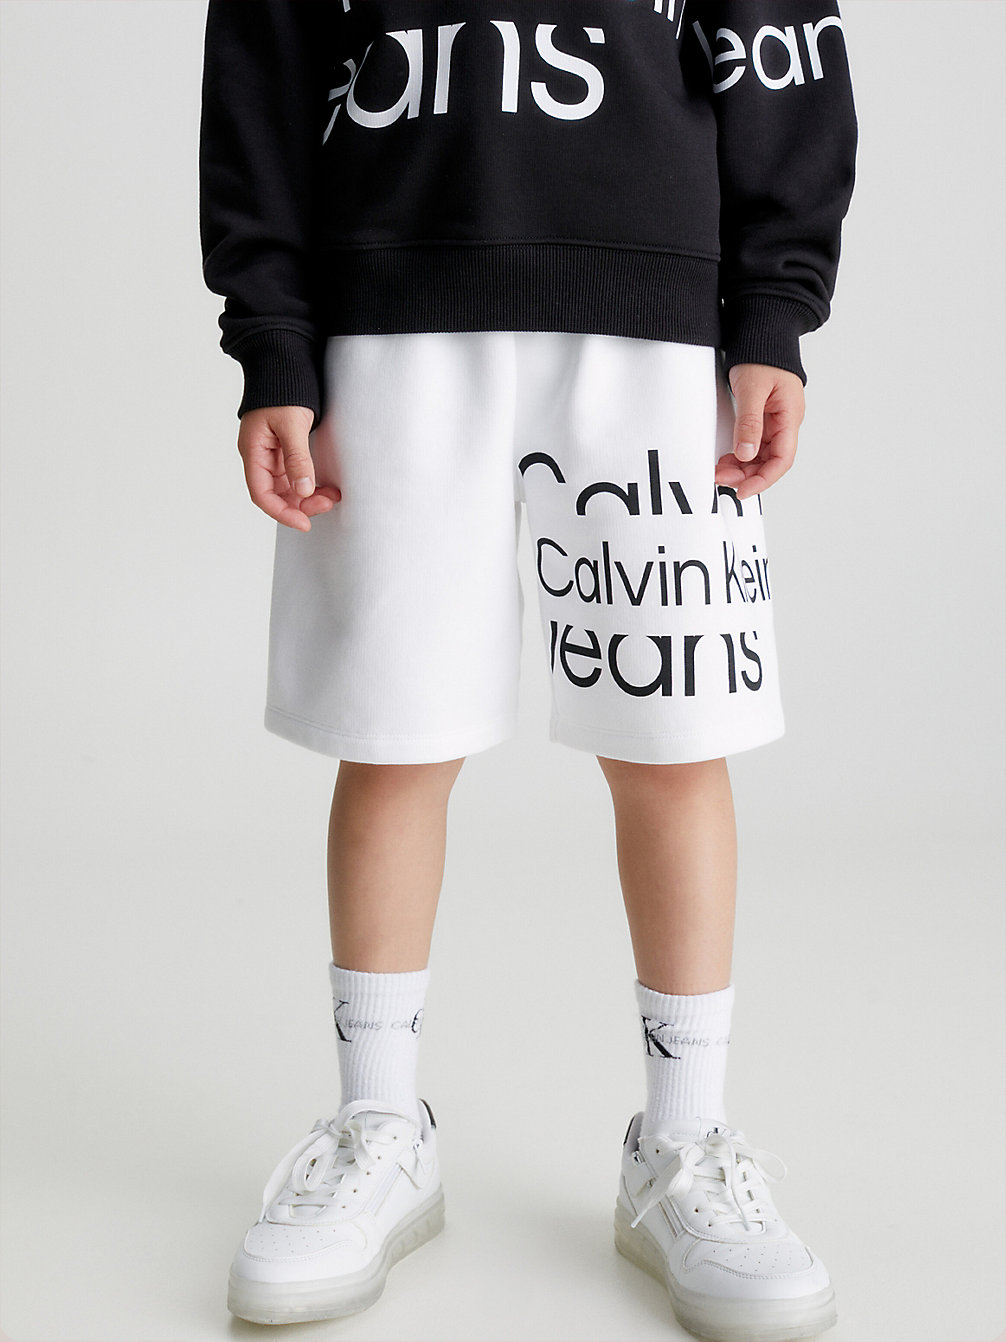 BRIGHT WHITE Logo Jogger Shorts undefined boys Calvin Klein